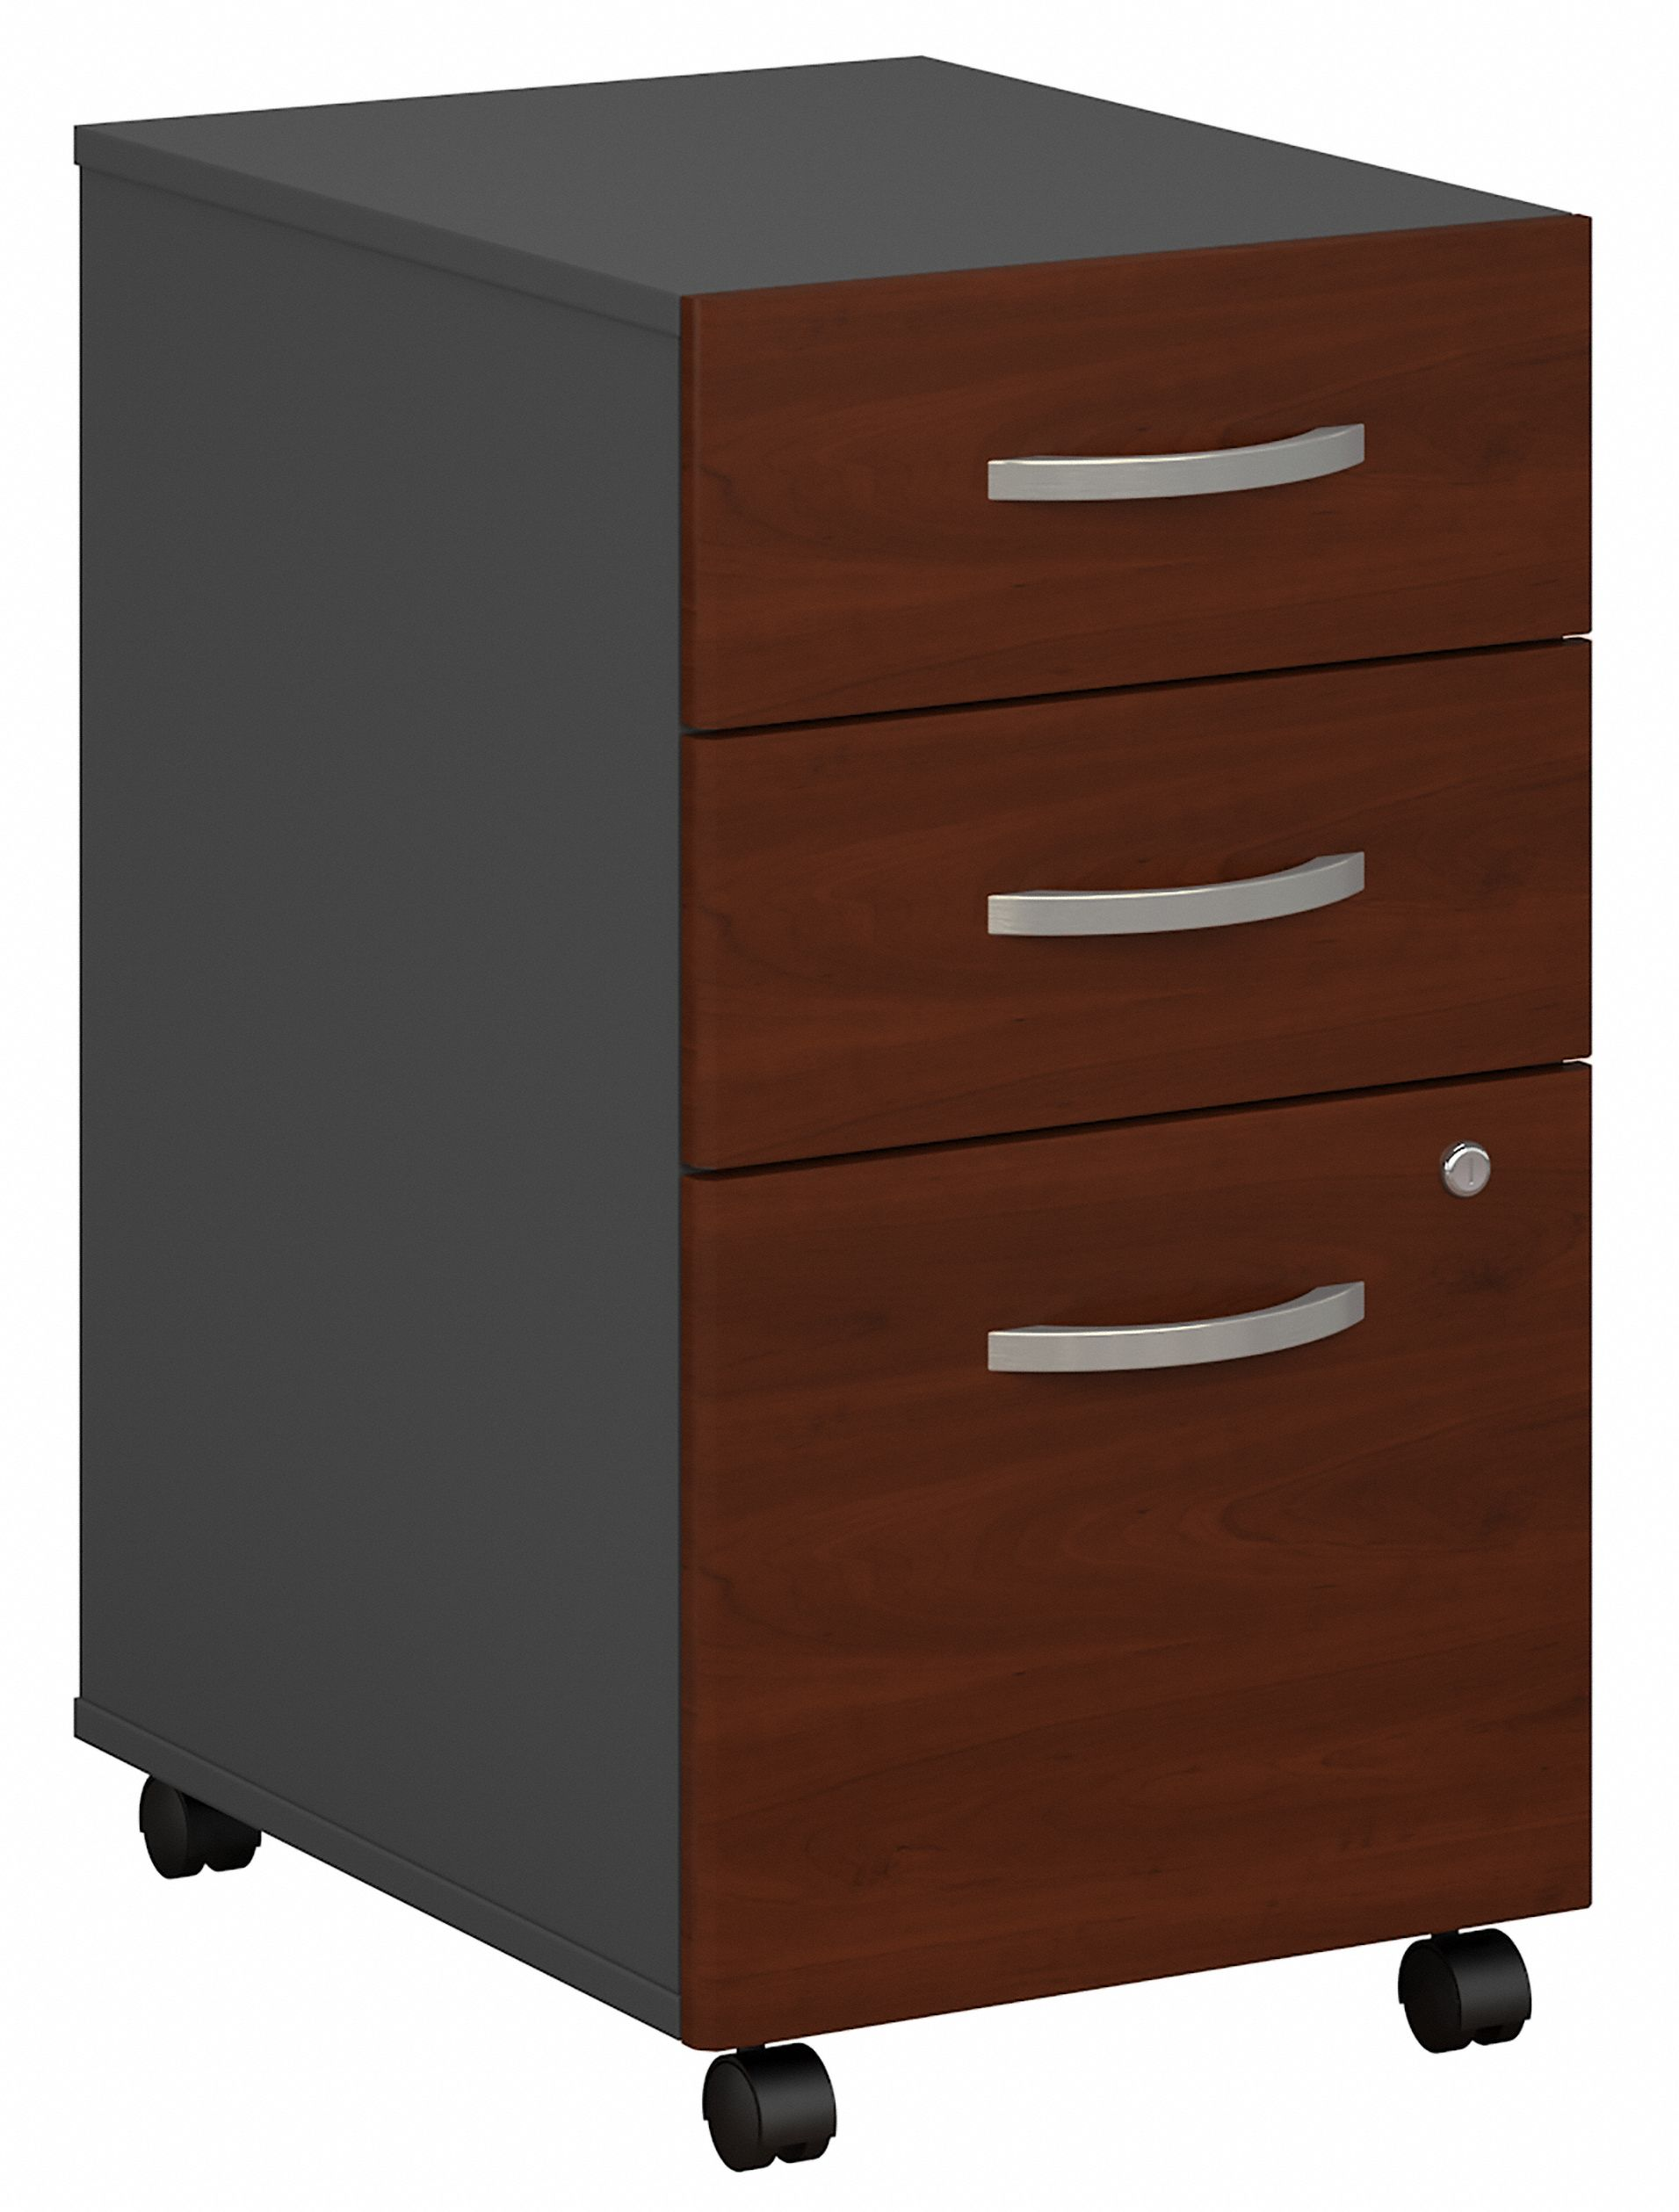 Shop Bush Business Furniture Series C 3 Drawer Mobile File Cabinet - Assembled 02 WC24453SU #color_hansen cherry/graphite gray